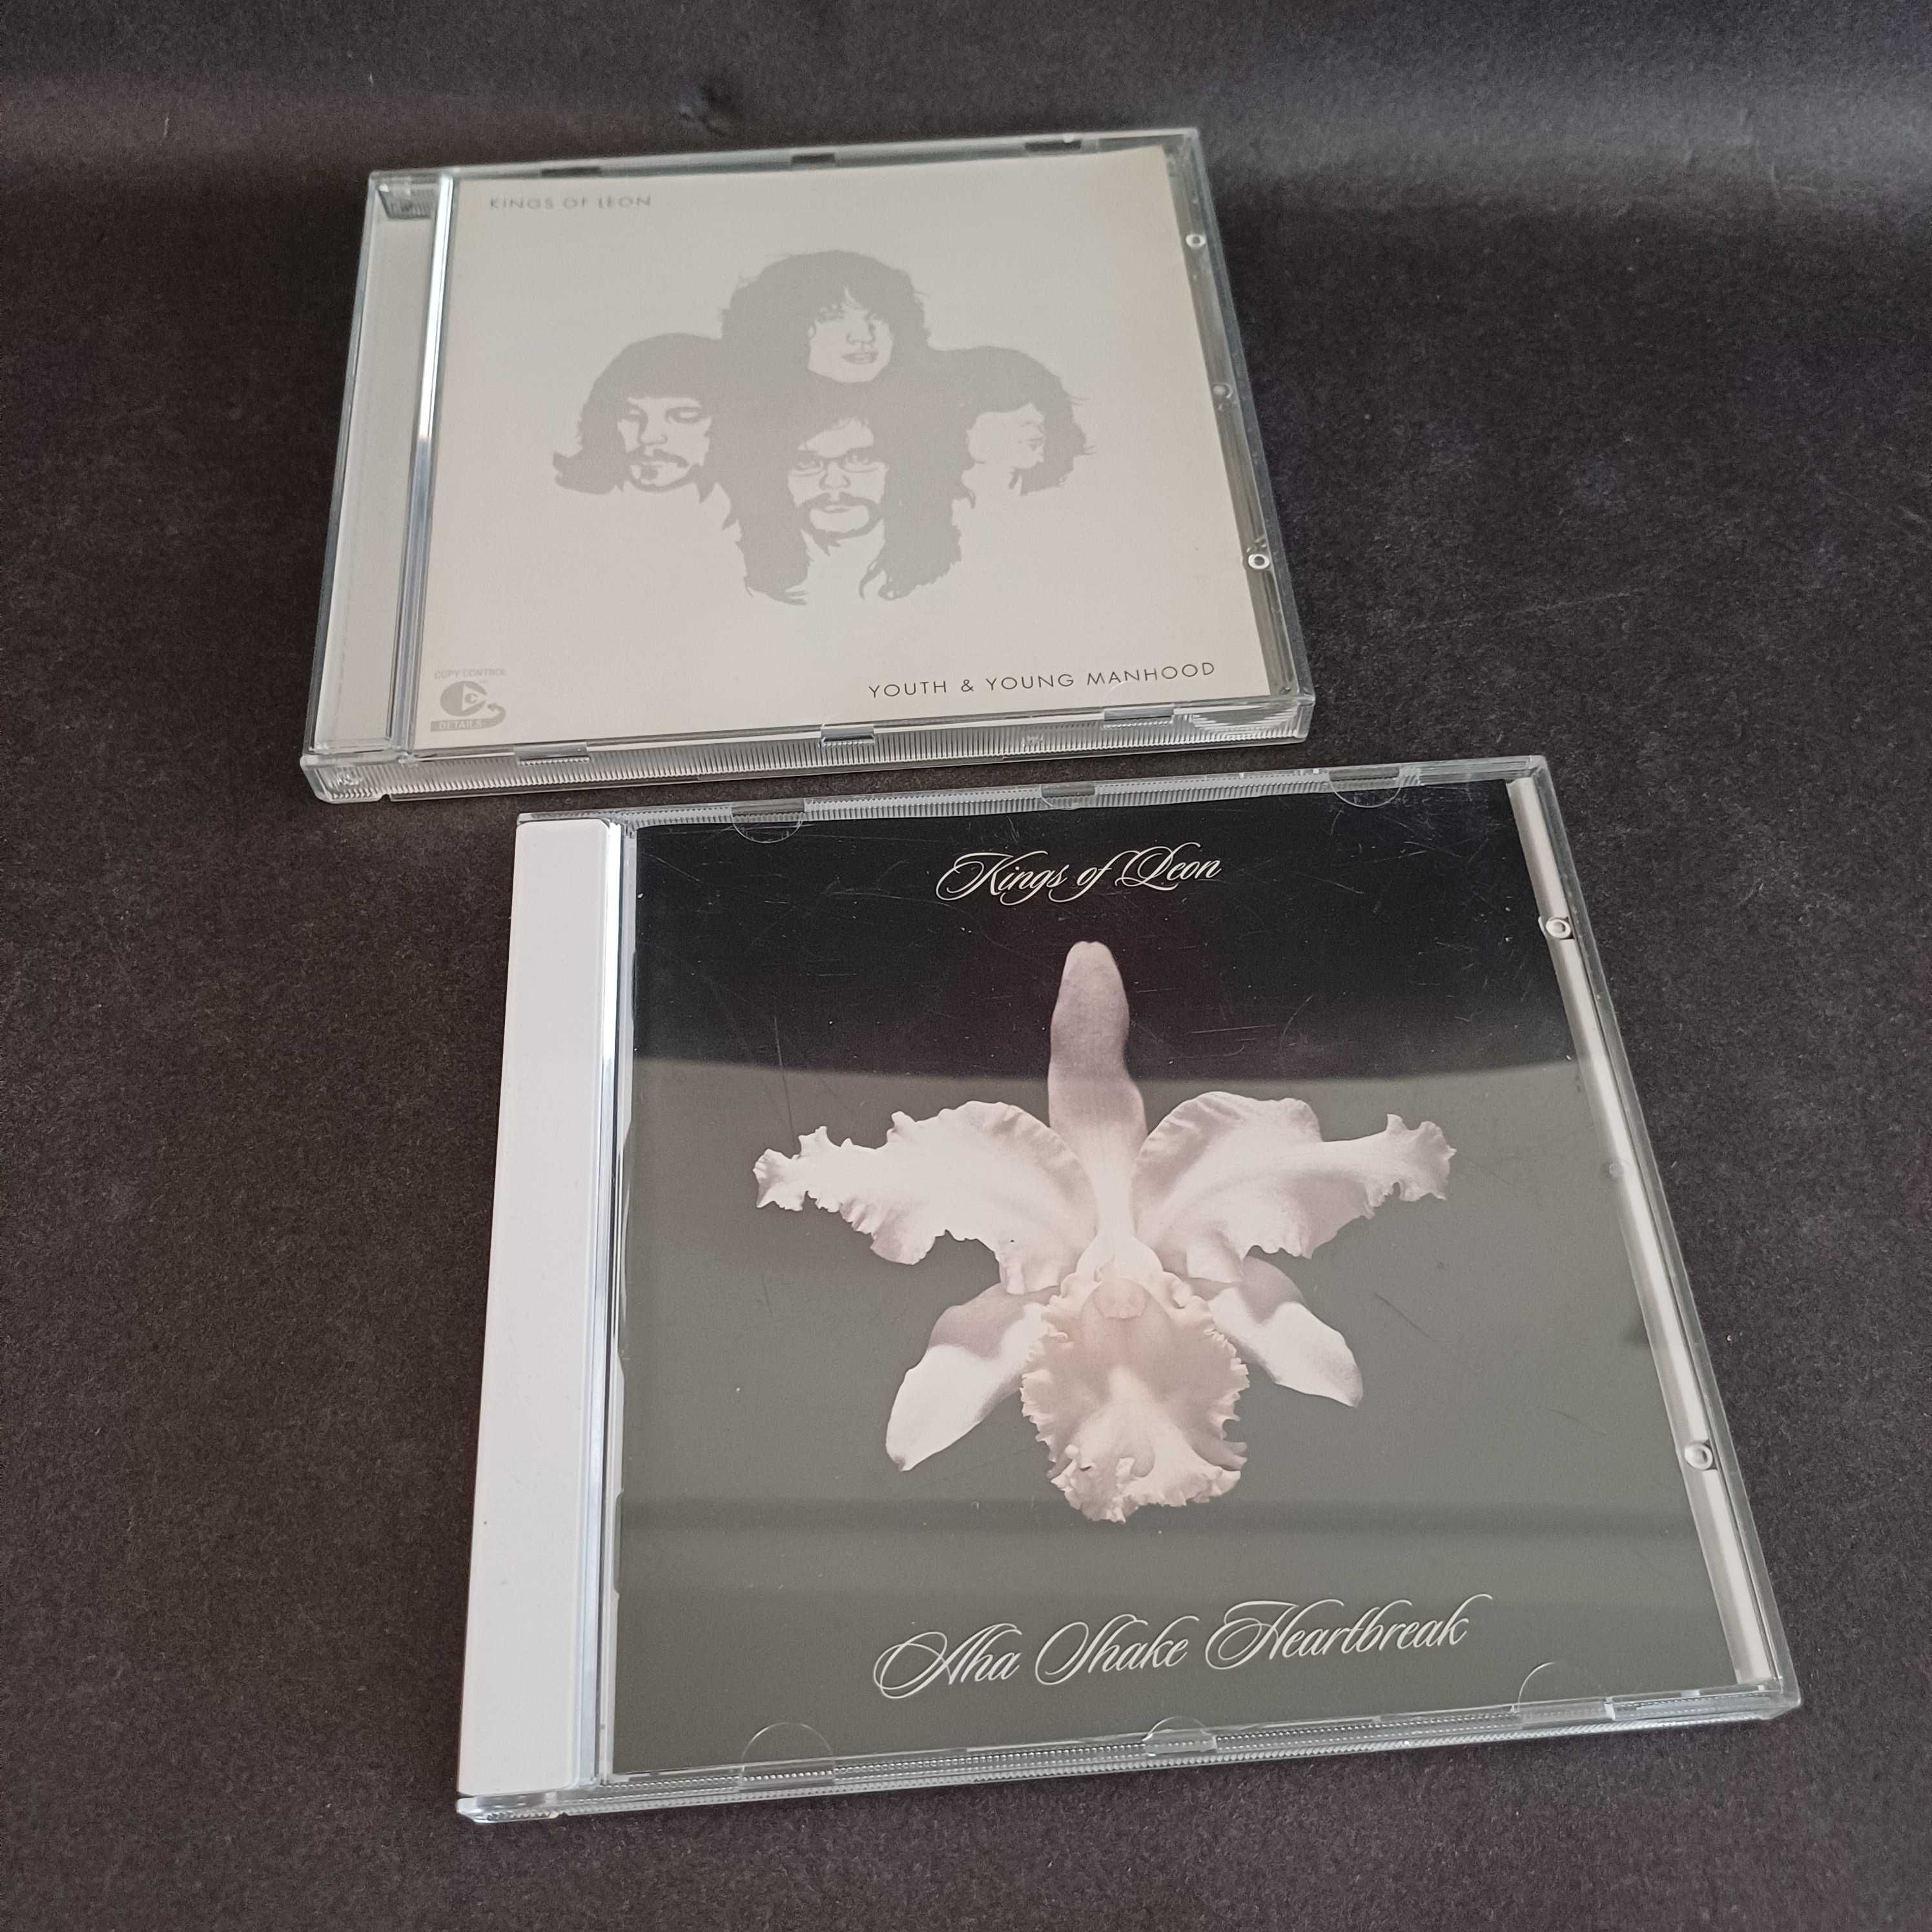 Kings of Leon - 2 álbuns